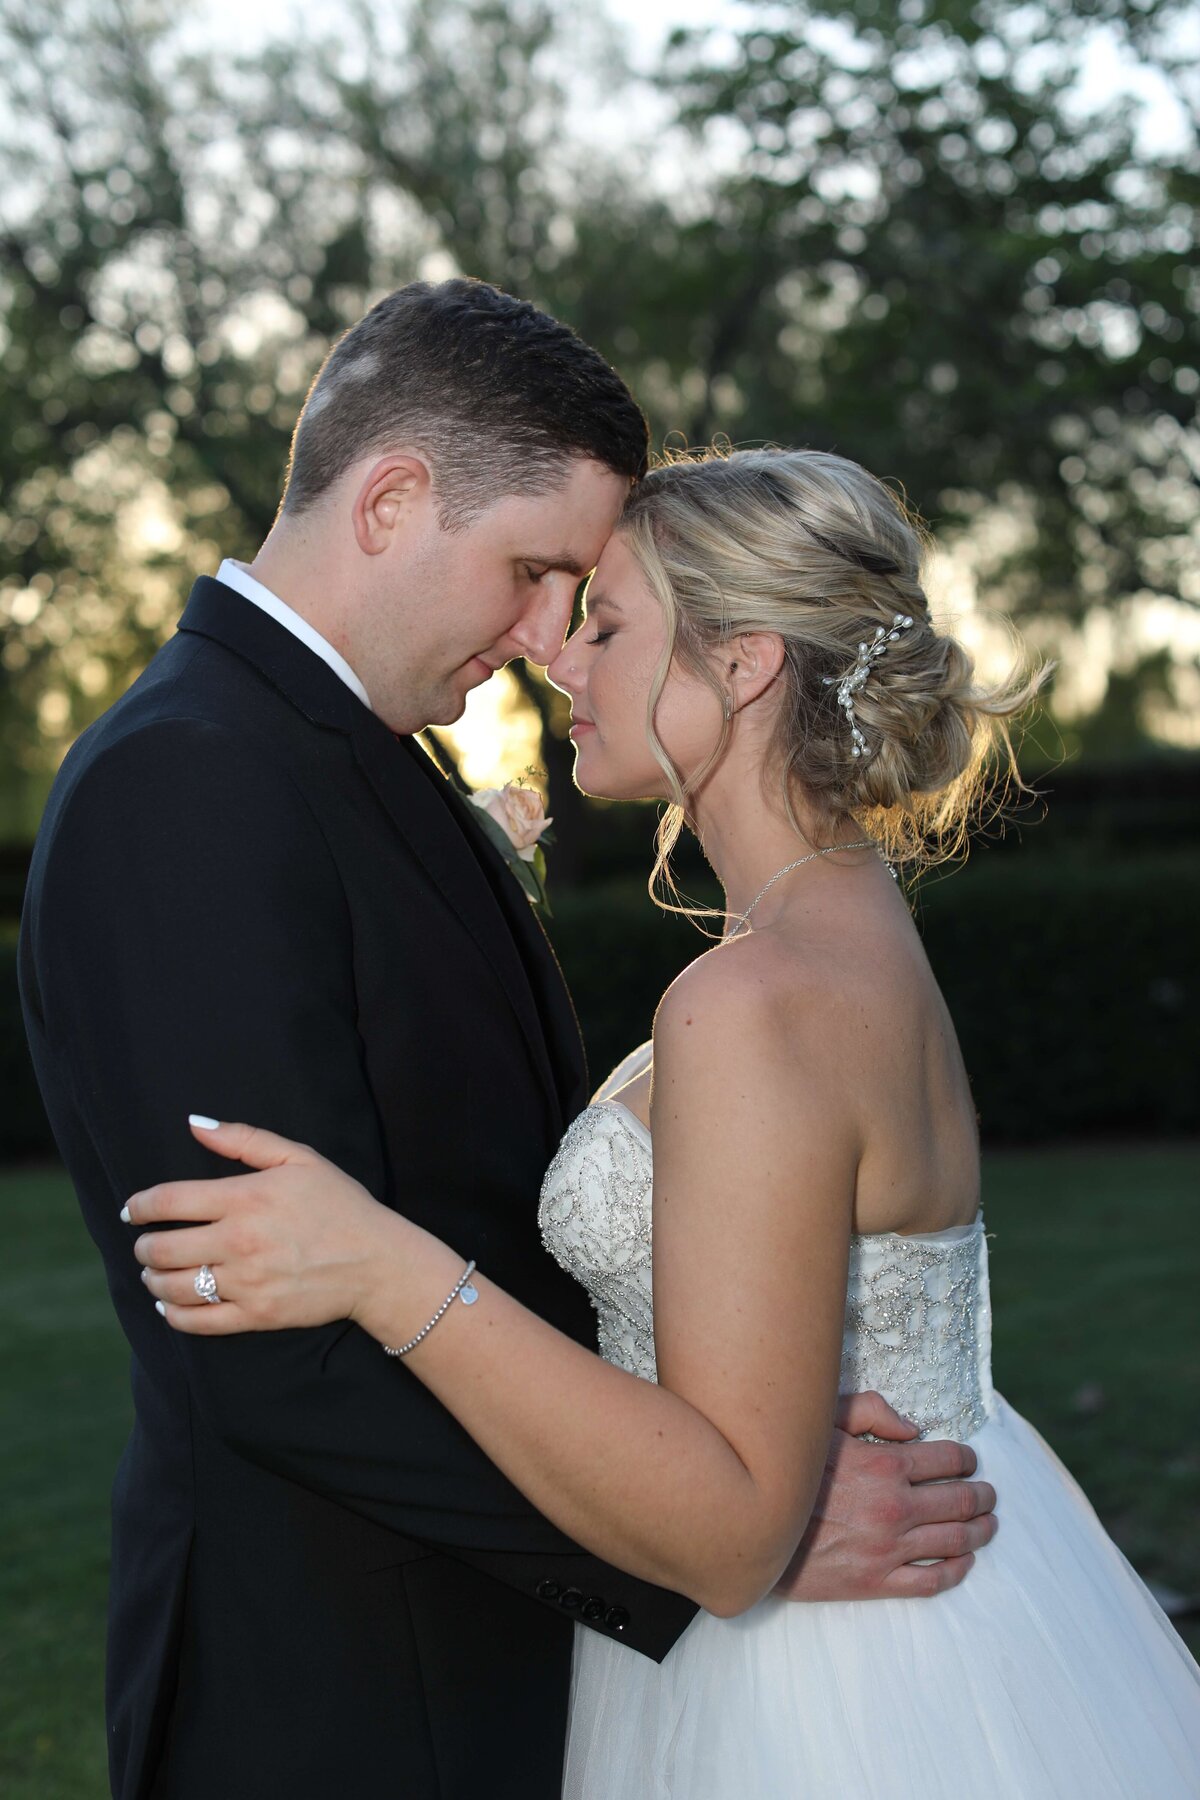 KS-Gray-Photography-newport-beach-wedding-photographer-bride-and-groom-portrait